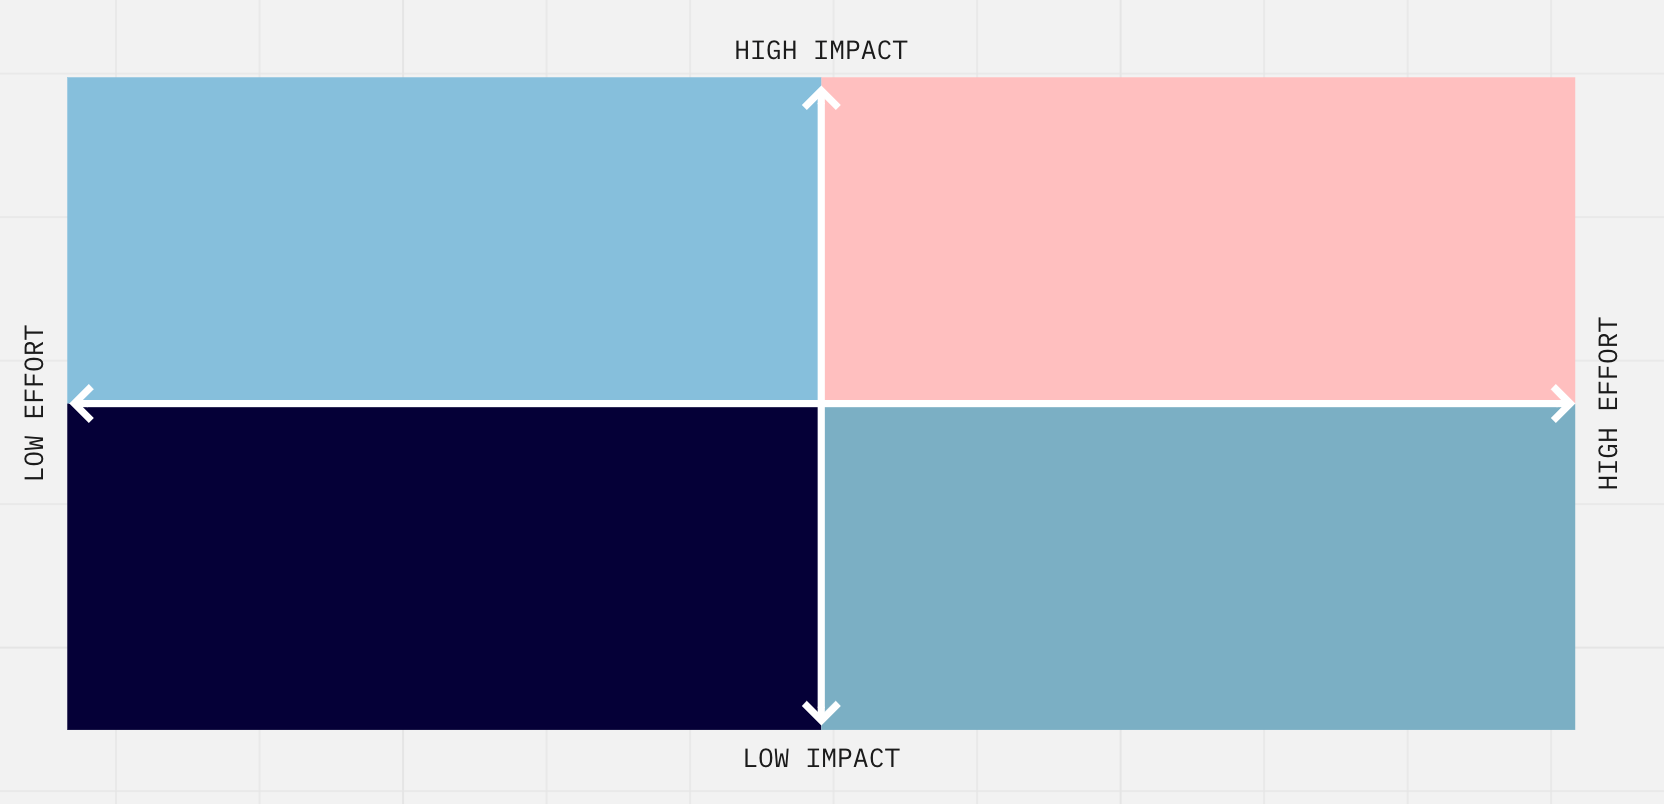 Effort - Impact Matrix